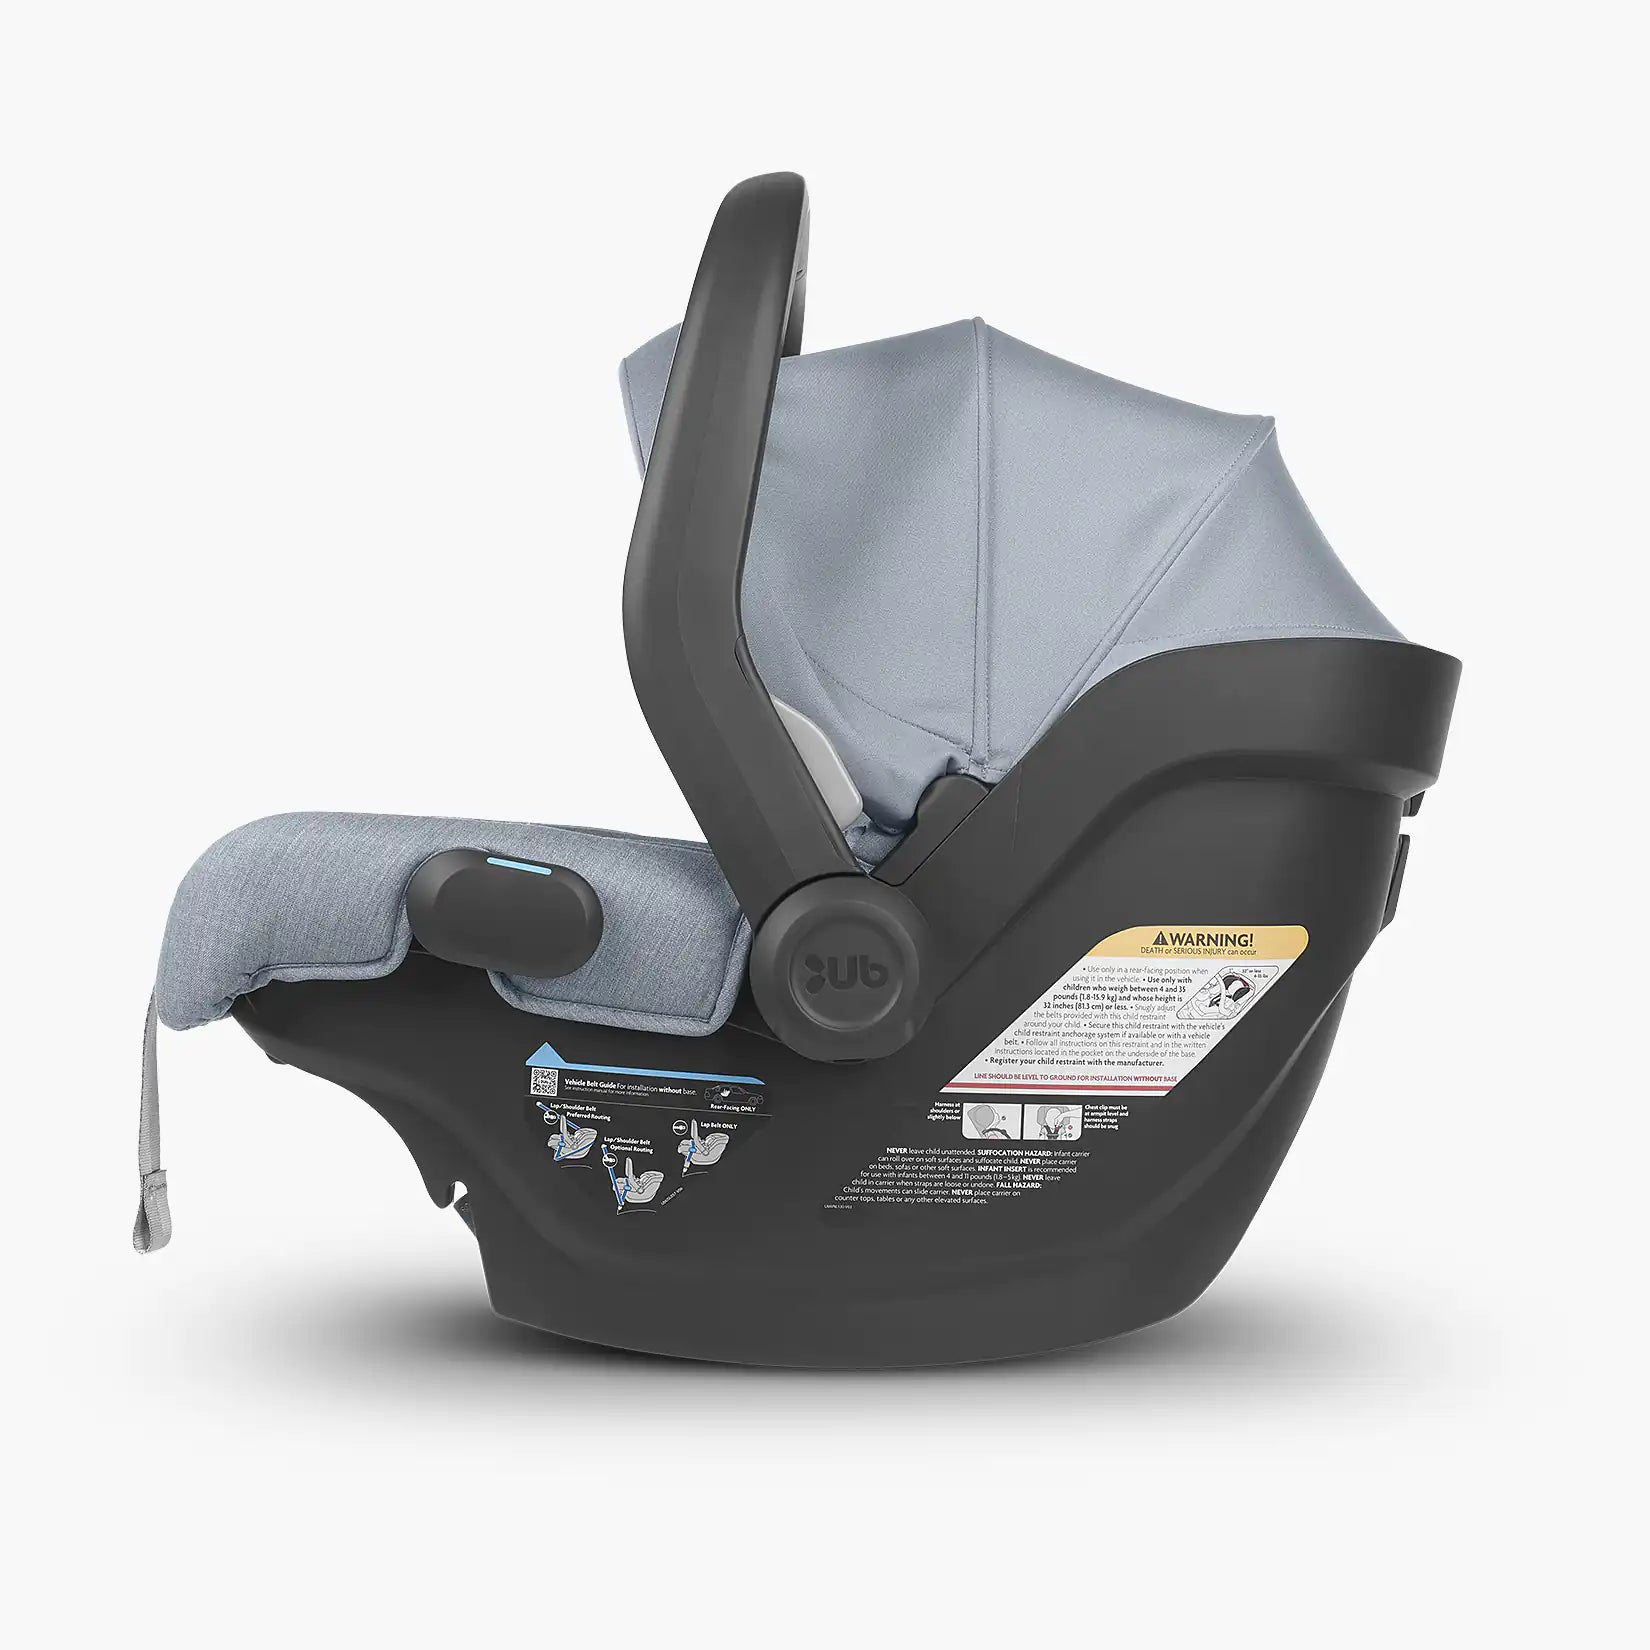 UPPAbaby Mesa V2 Infant Car Seat - Gregory (Blue Melange) (Open box - NEW)